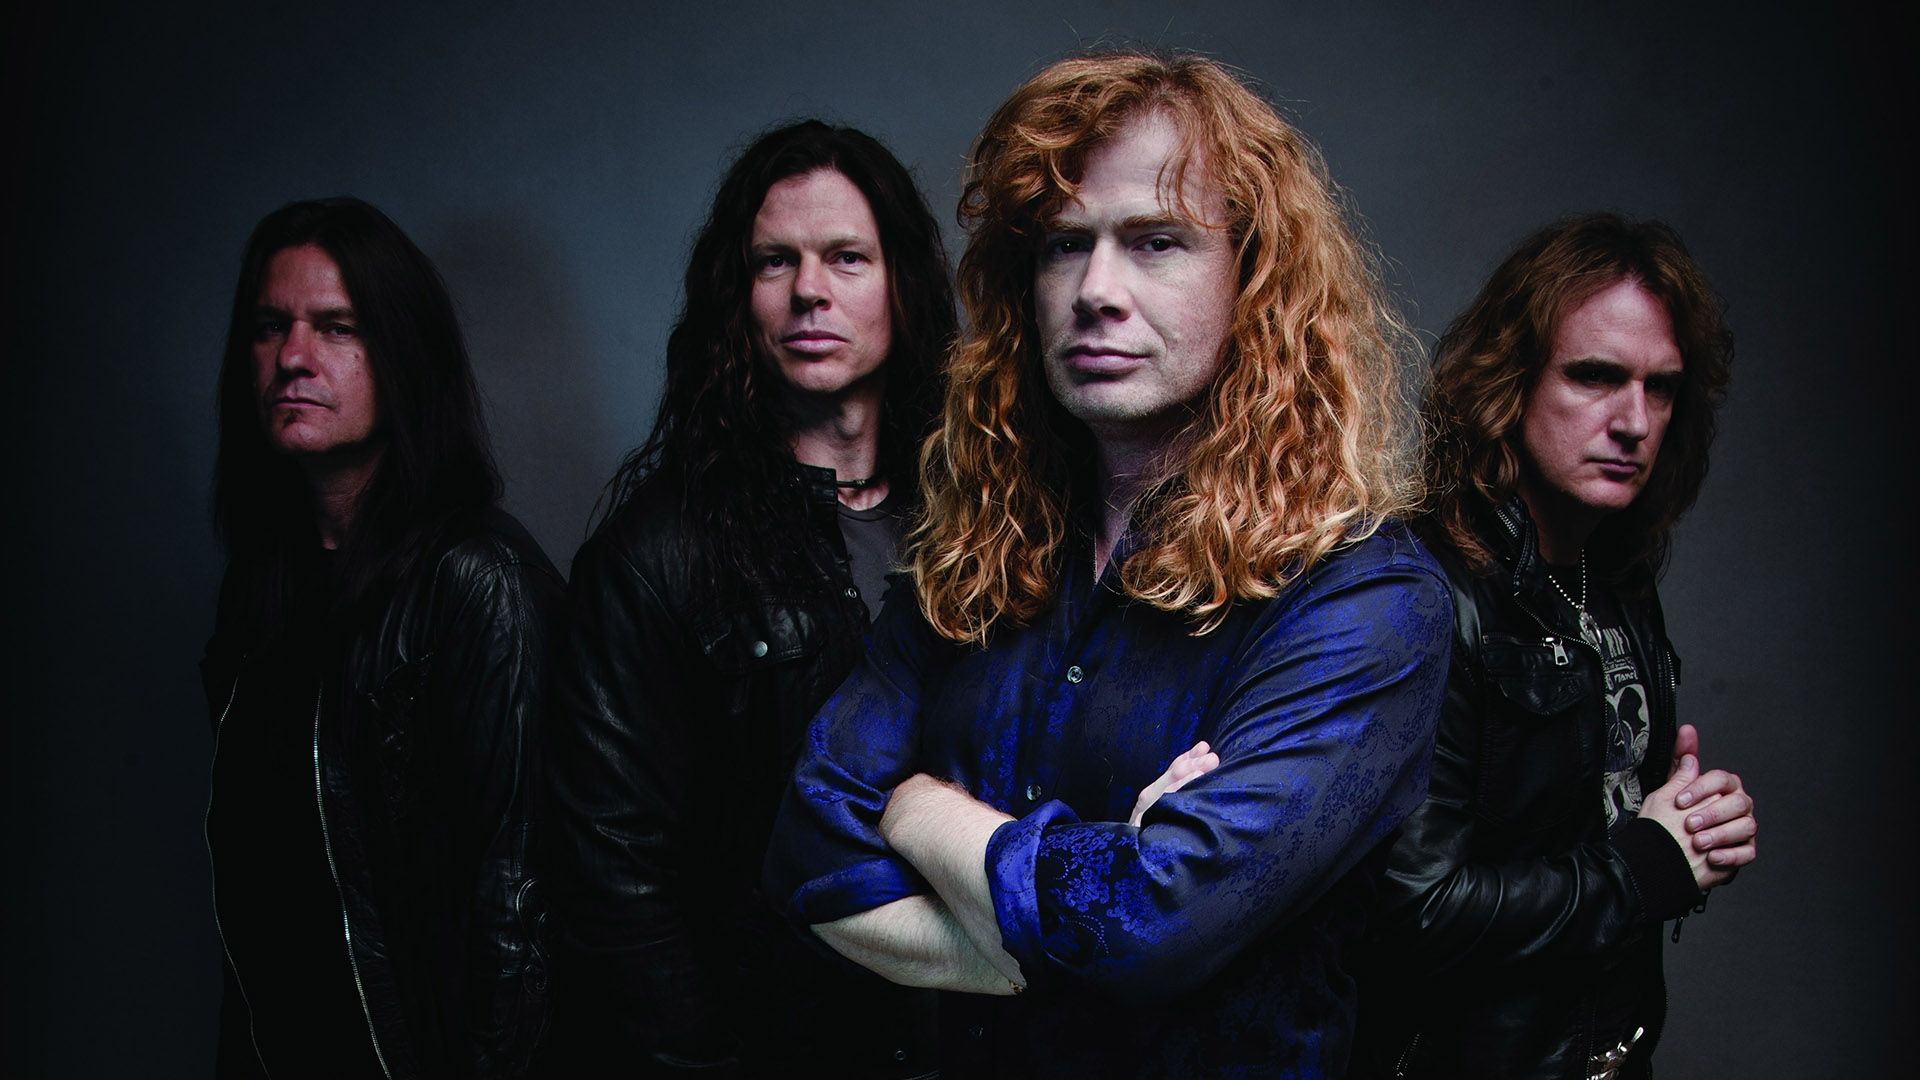 Download Wallpaper 1920x1080 Megadeth, Band, Hair, Clothes ...